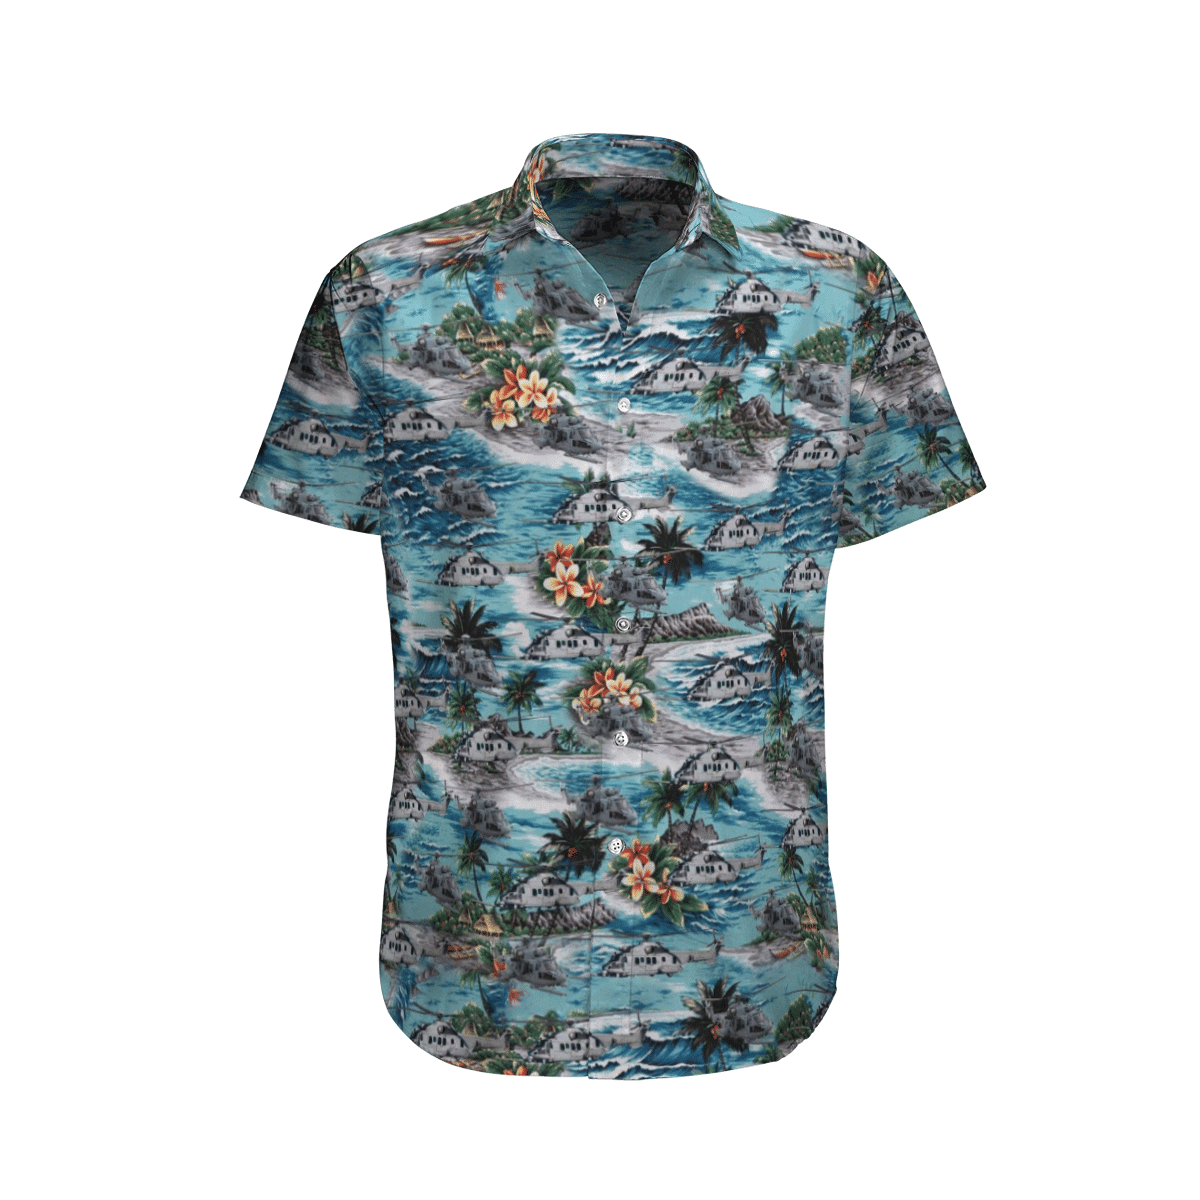 Get a new Hawaiian shirt to enjoy summer vacation 96